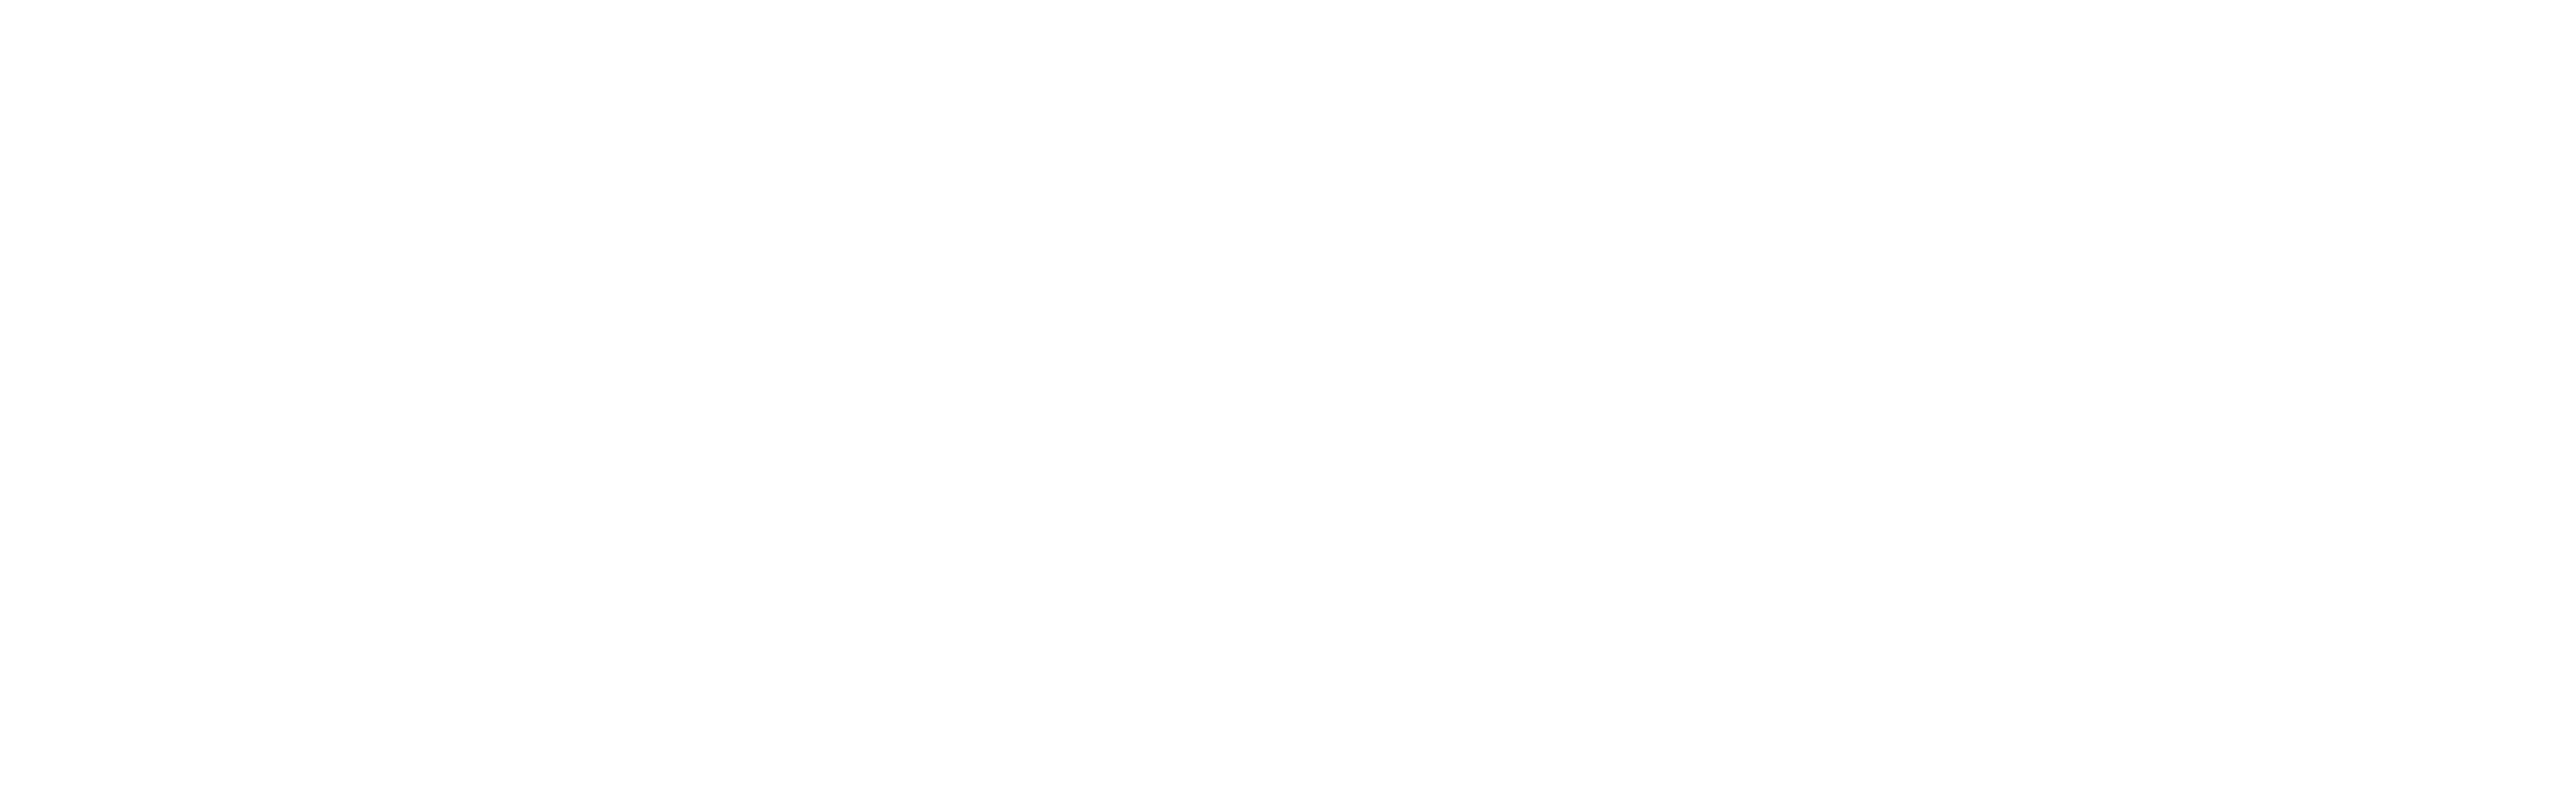 GTIME Blockchain